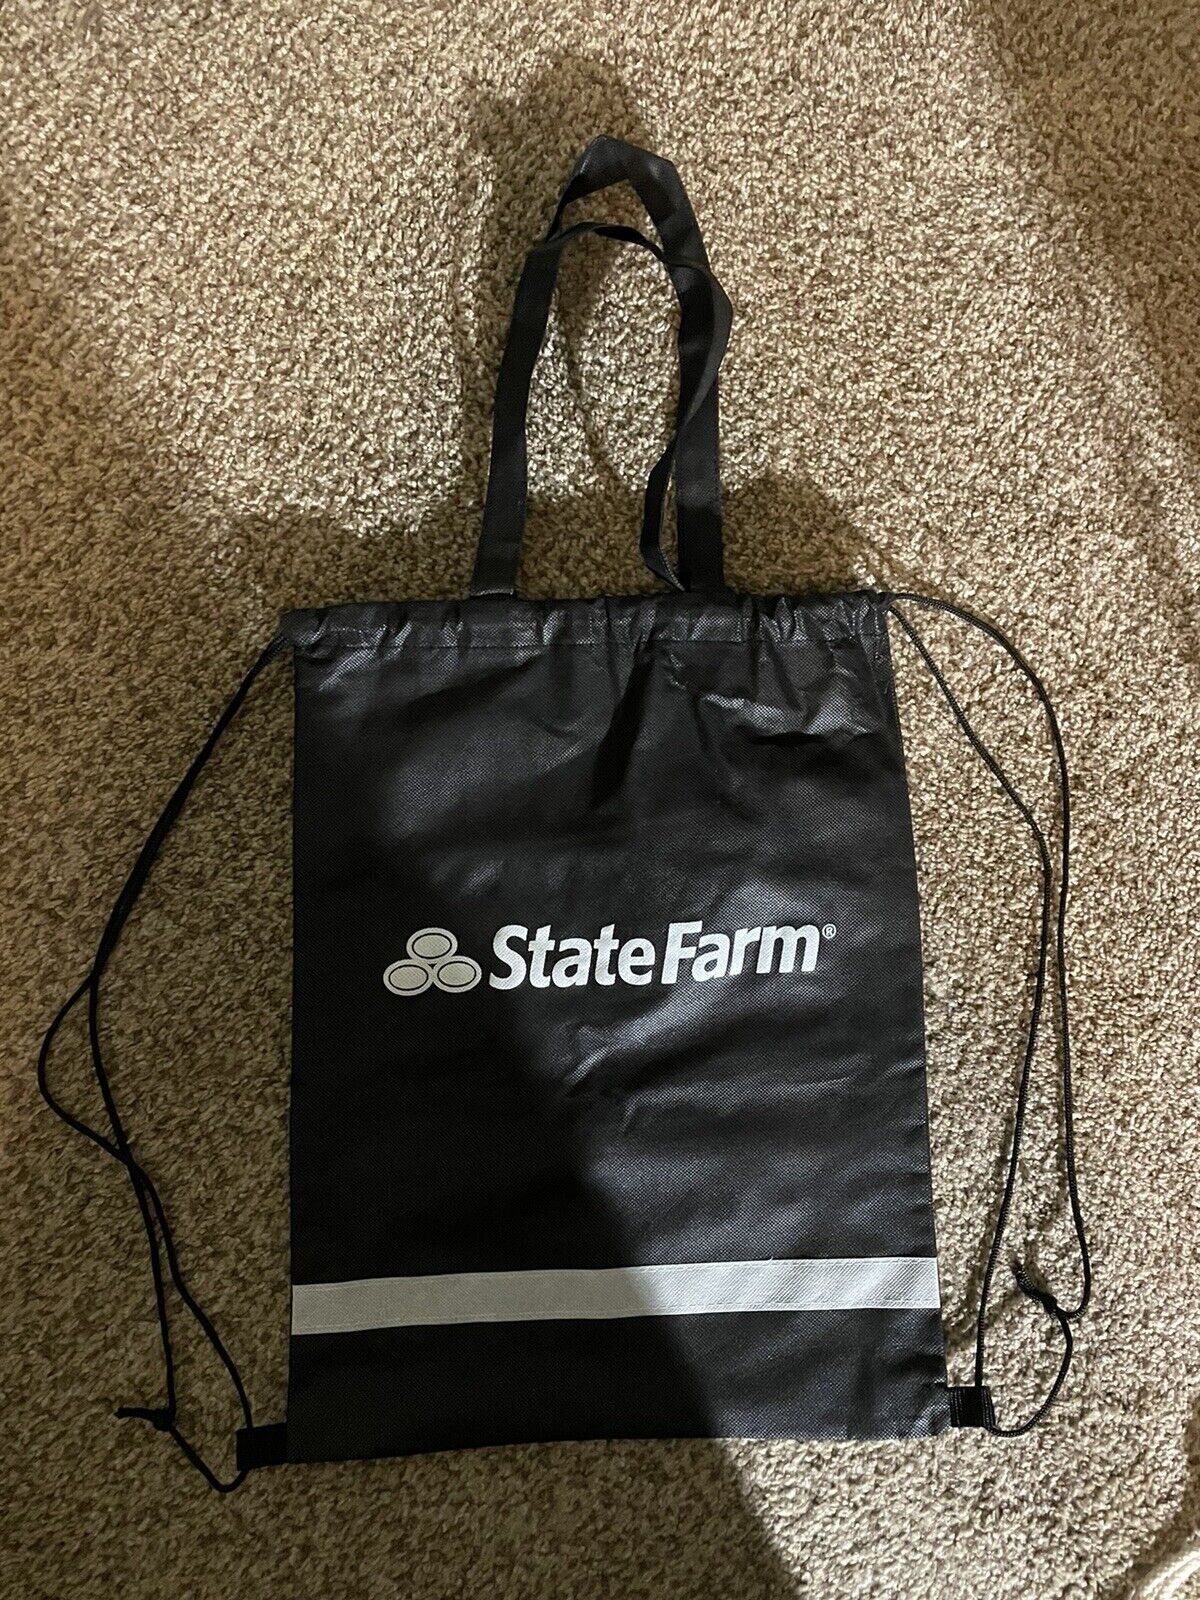 Drawstring Backpack/Recycle Bag w/State Farm Logo - Black & White - New